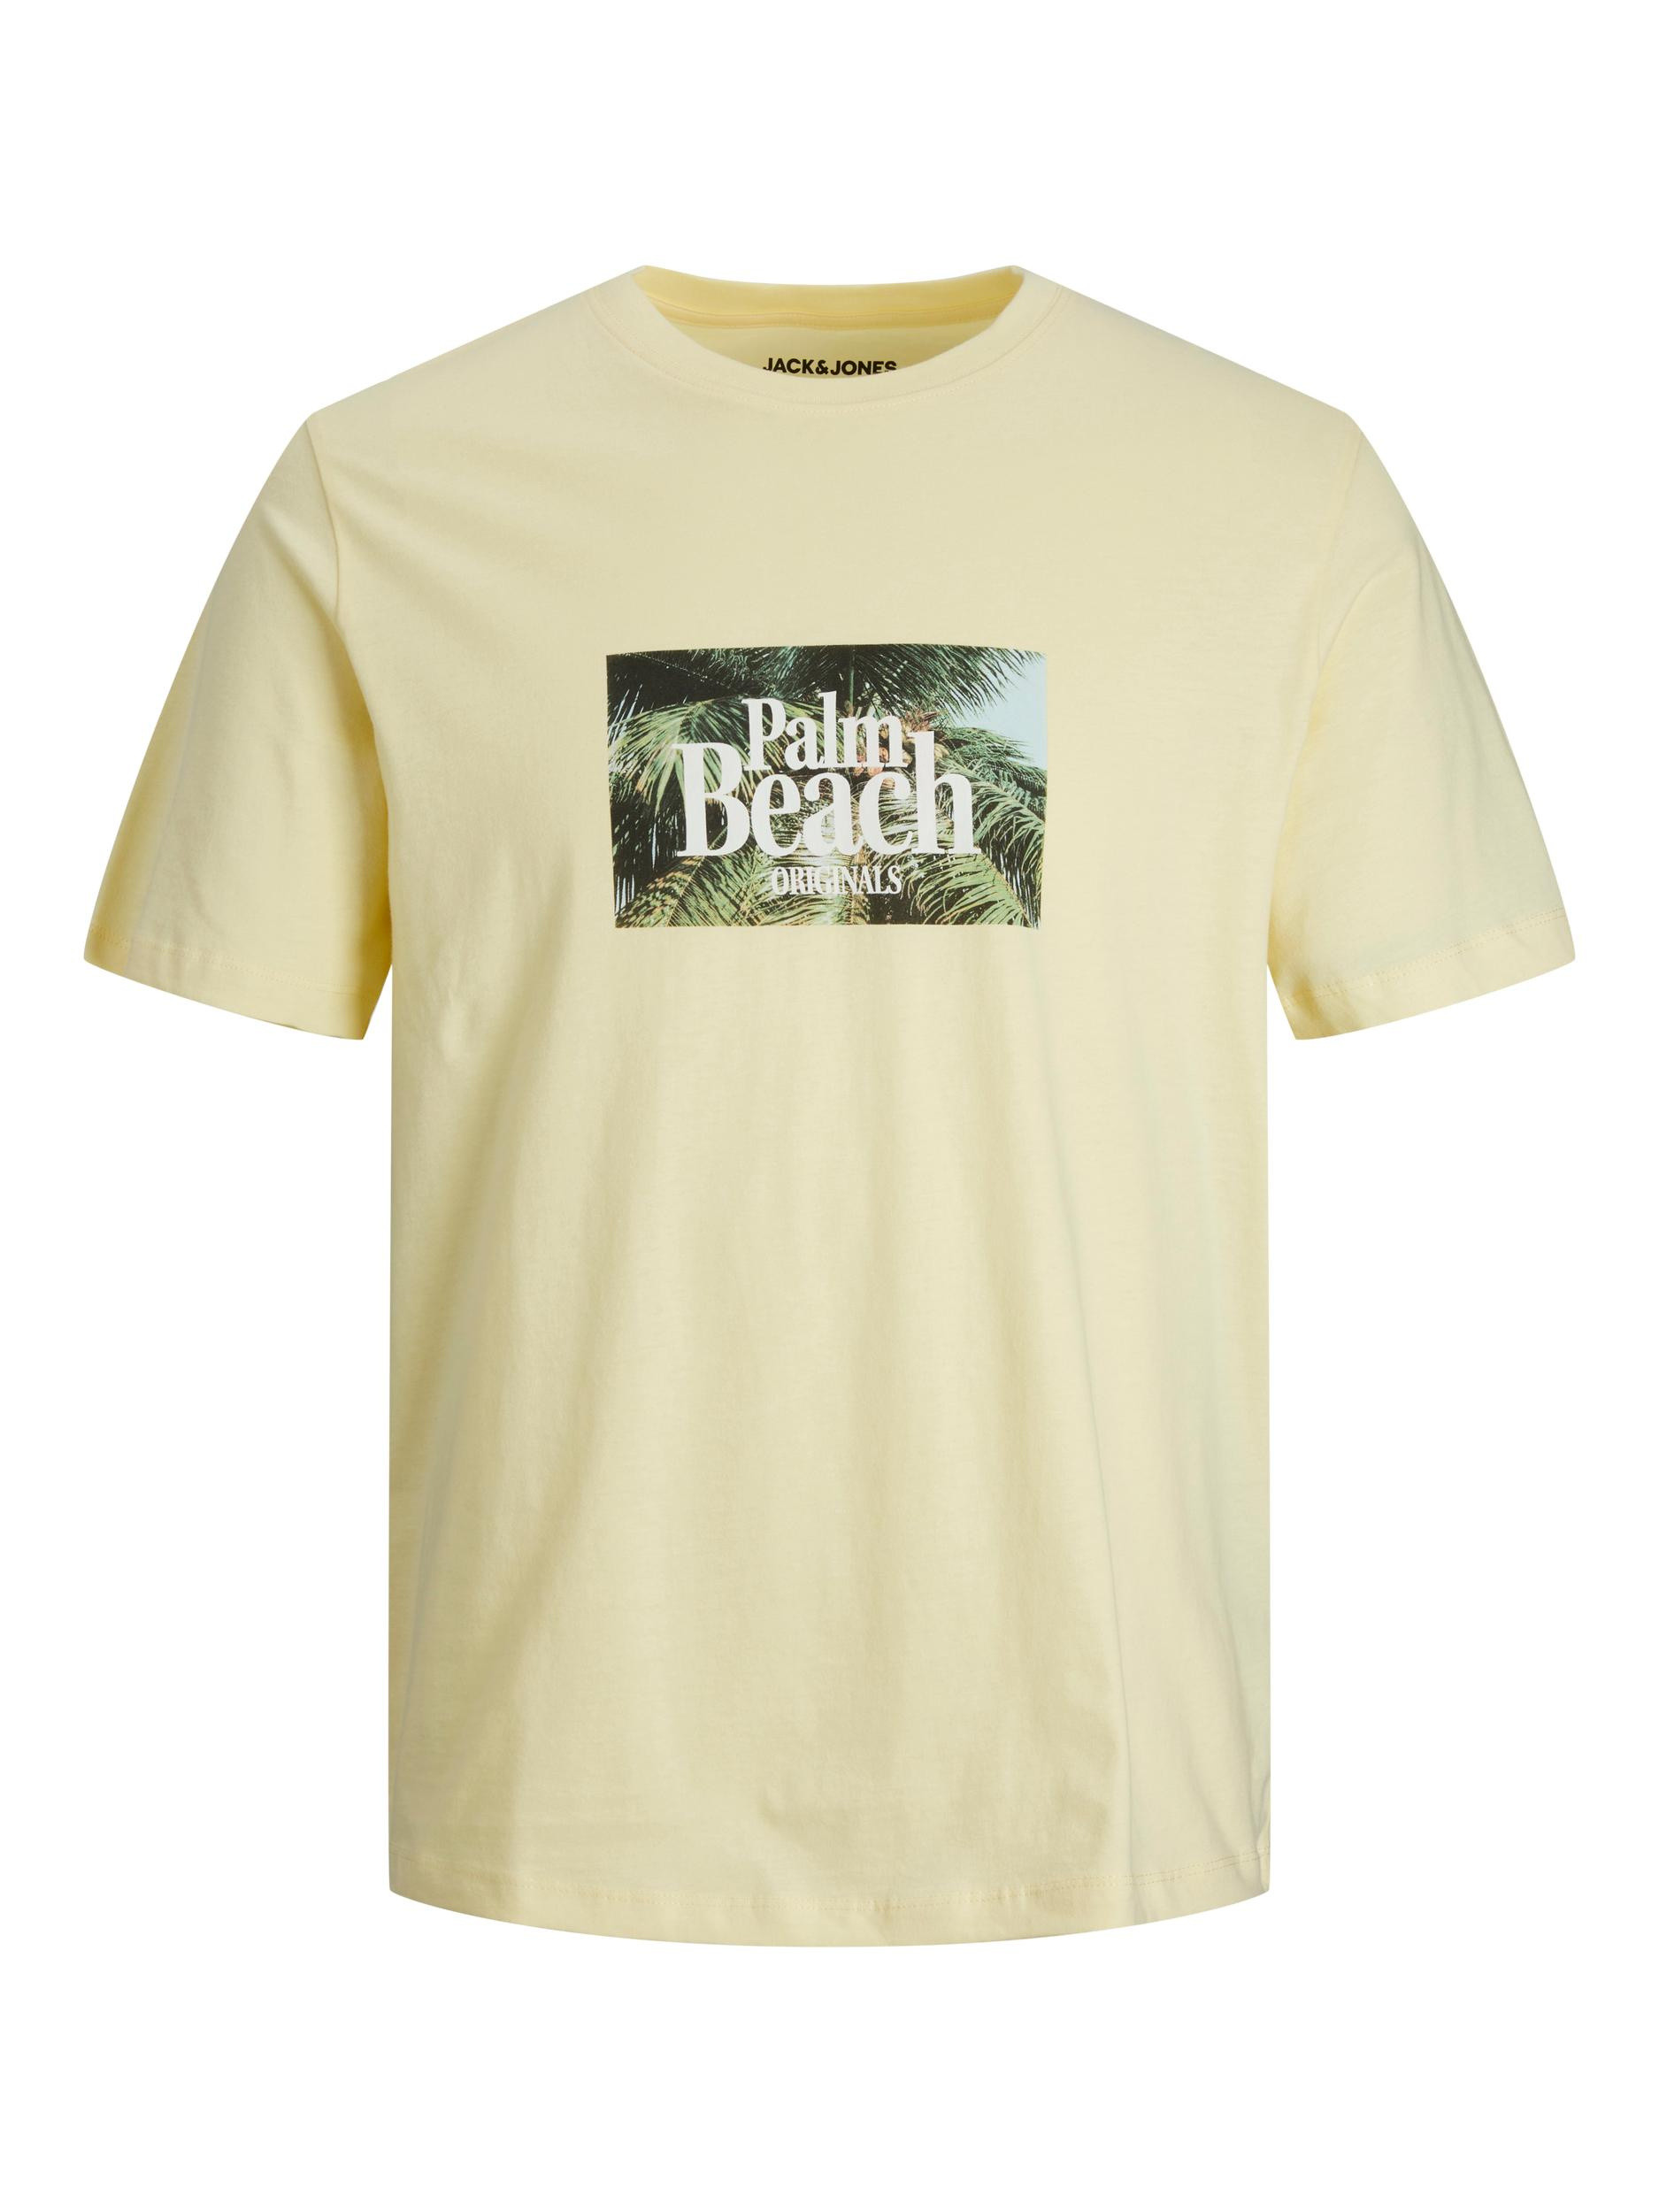 Jack & Jones - Printed cotton T-shirt, Light Yellow, large image number 0